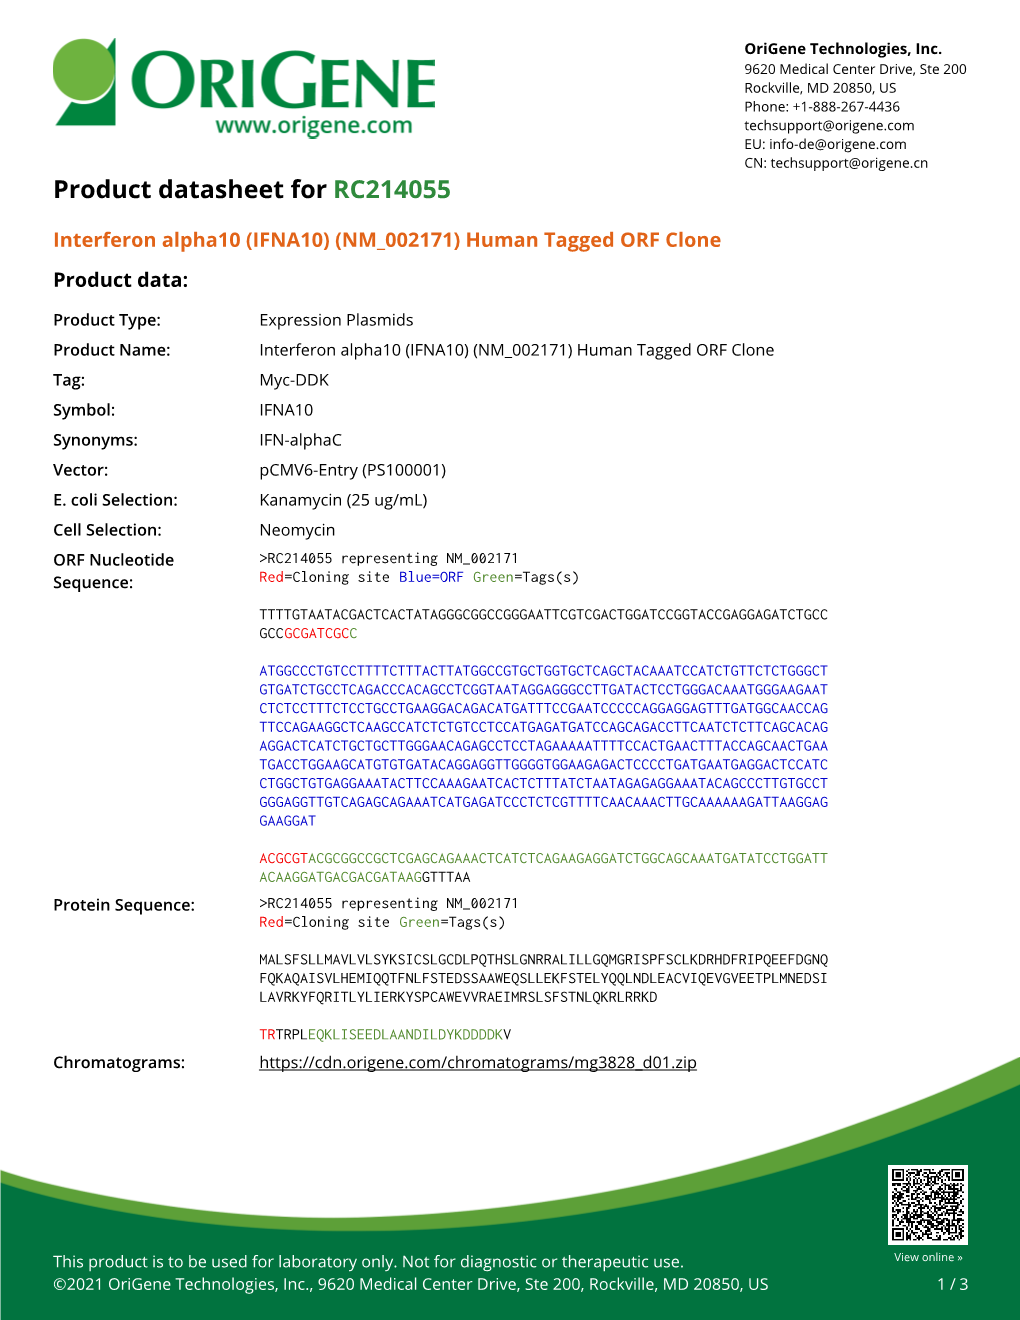 Interferon Alpha10 (IFNA10) (NM 002171) Human Tagged ORF Clone Product Data